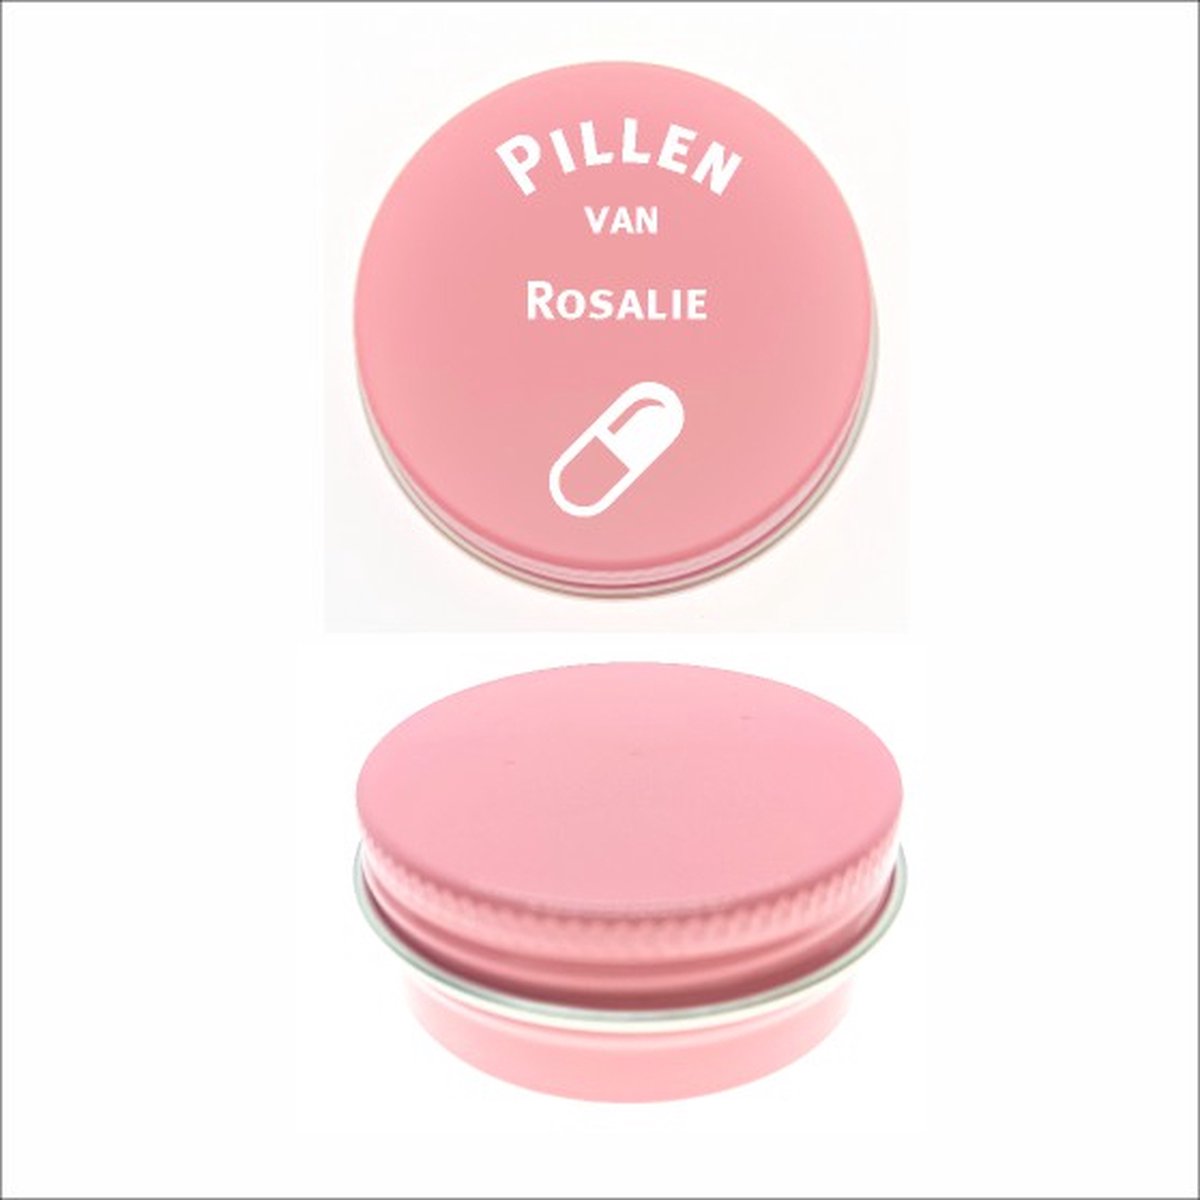 Pillen Blikje Met Naam Gravering - Rosalie